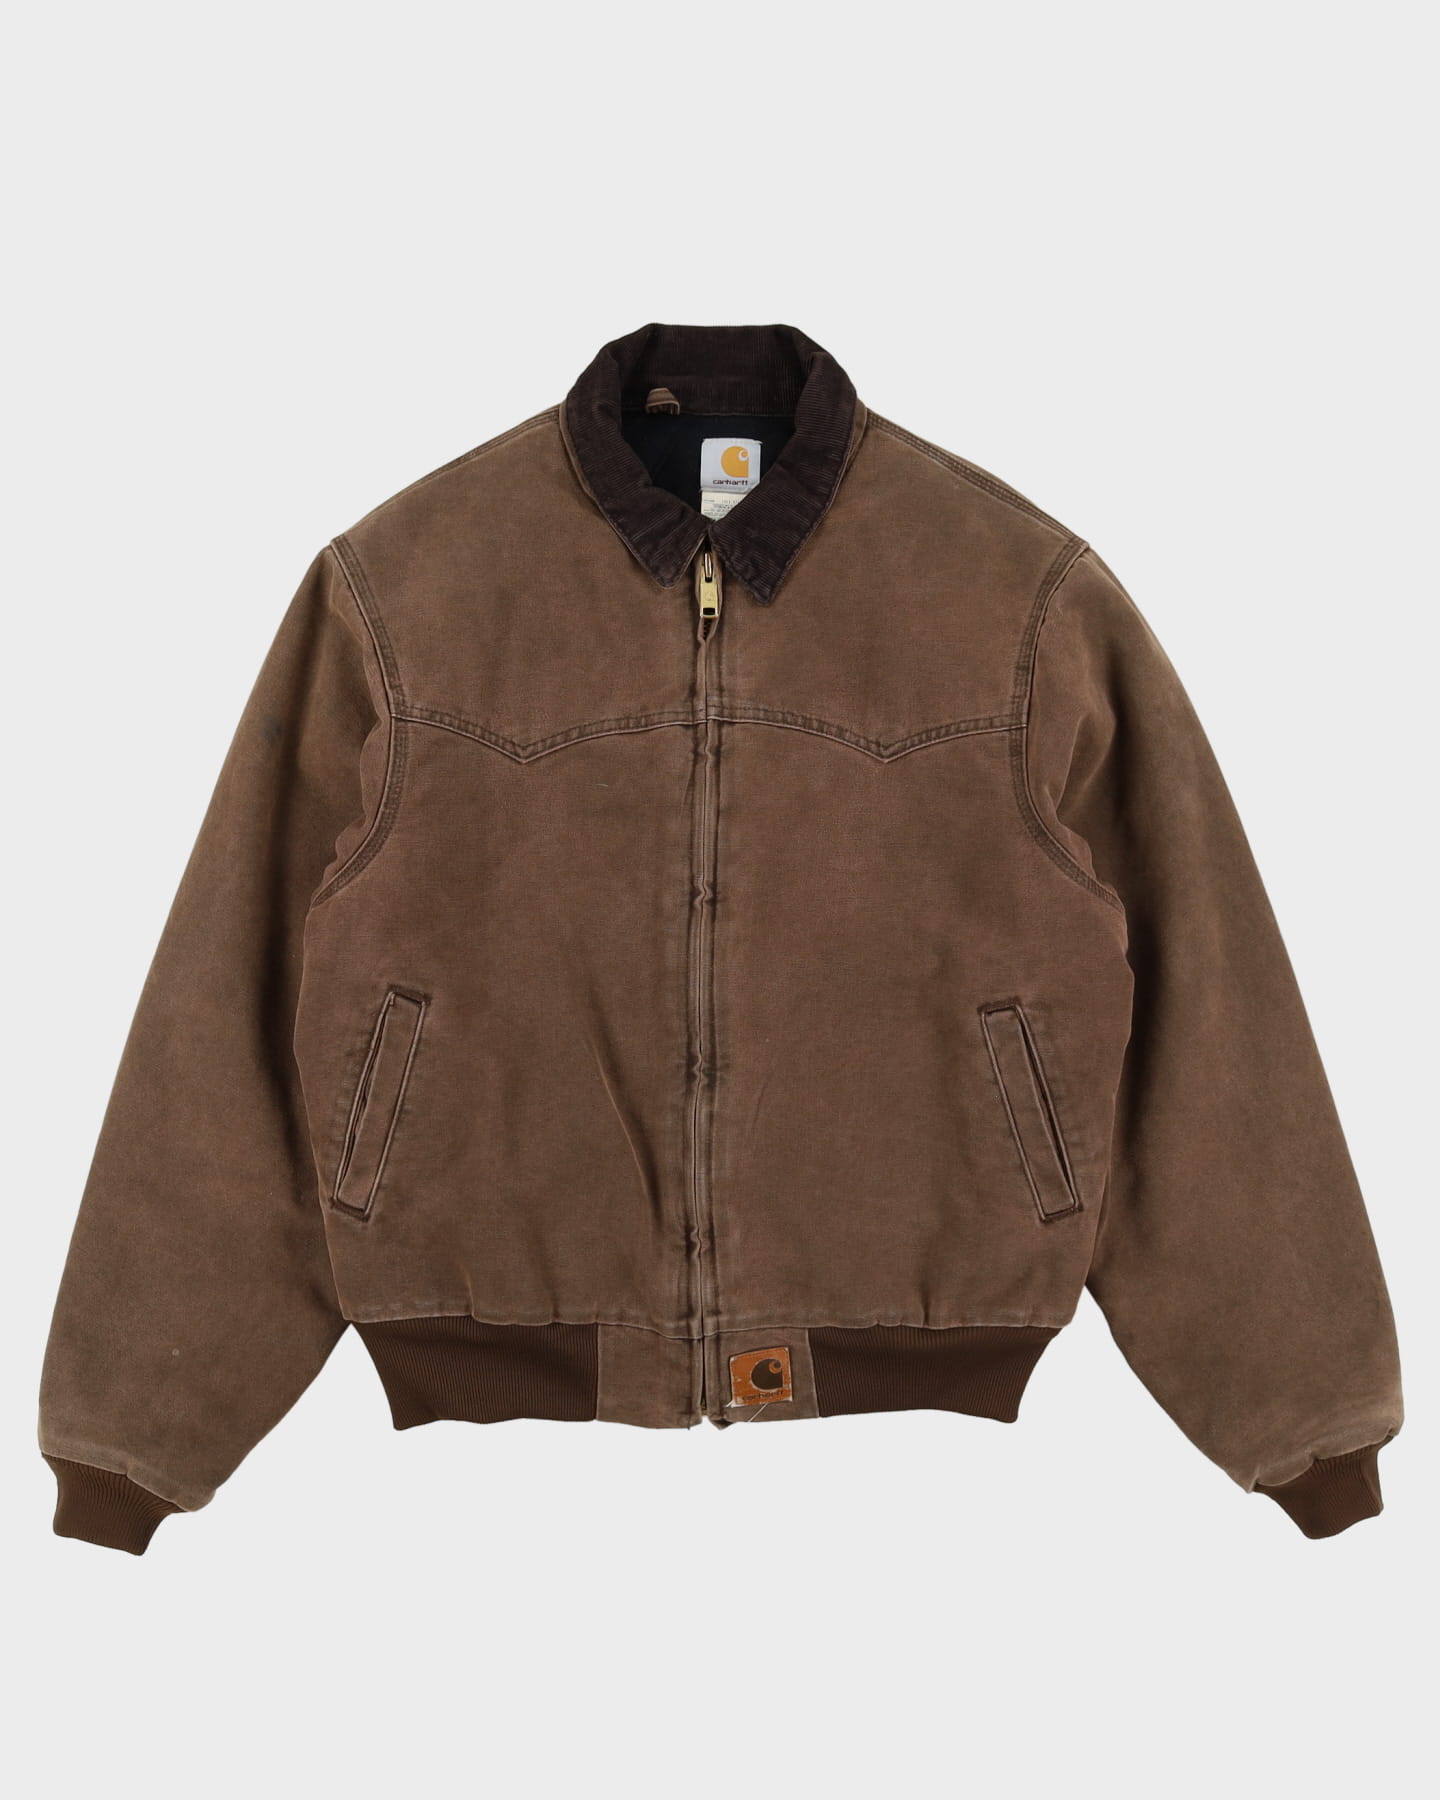 1989 Carhartt 100 Year Anniversary Brown Workwear / Chore Jacket - L